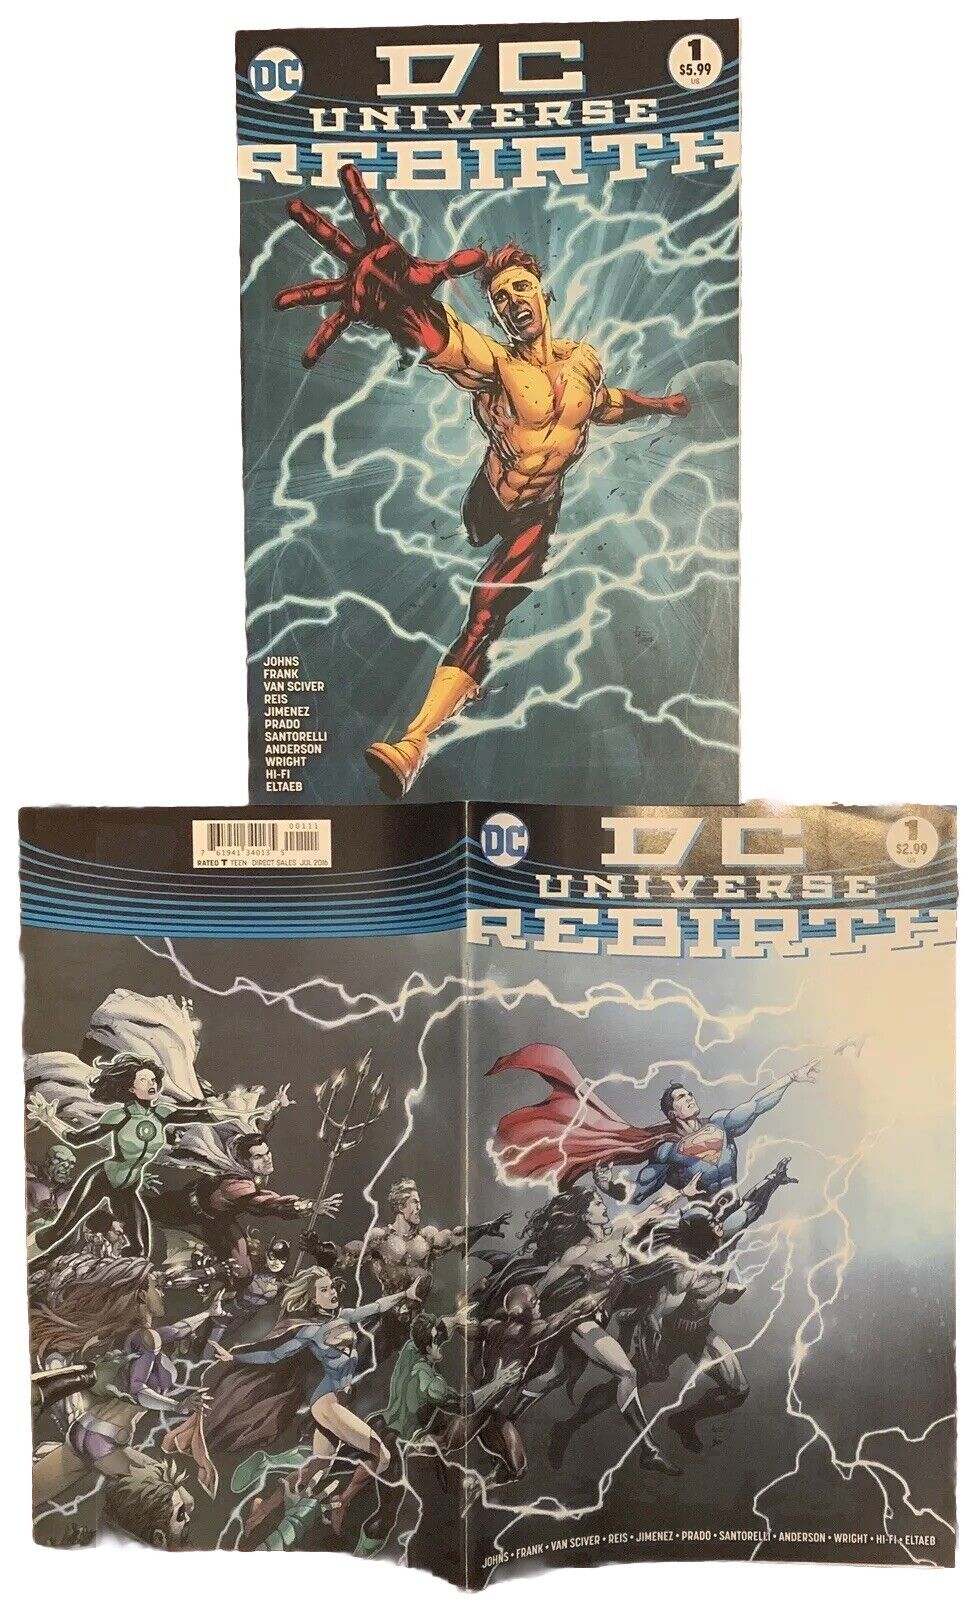 DC UNIVERSE REBIRTH #1 FN/VF + DC UNIVERSE REBIRTH #1 3rd Print Wally West VF+